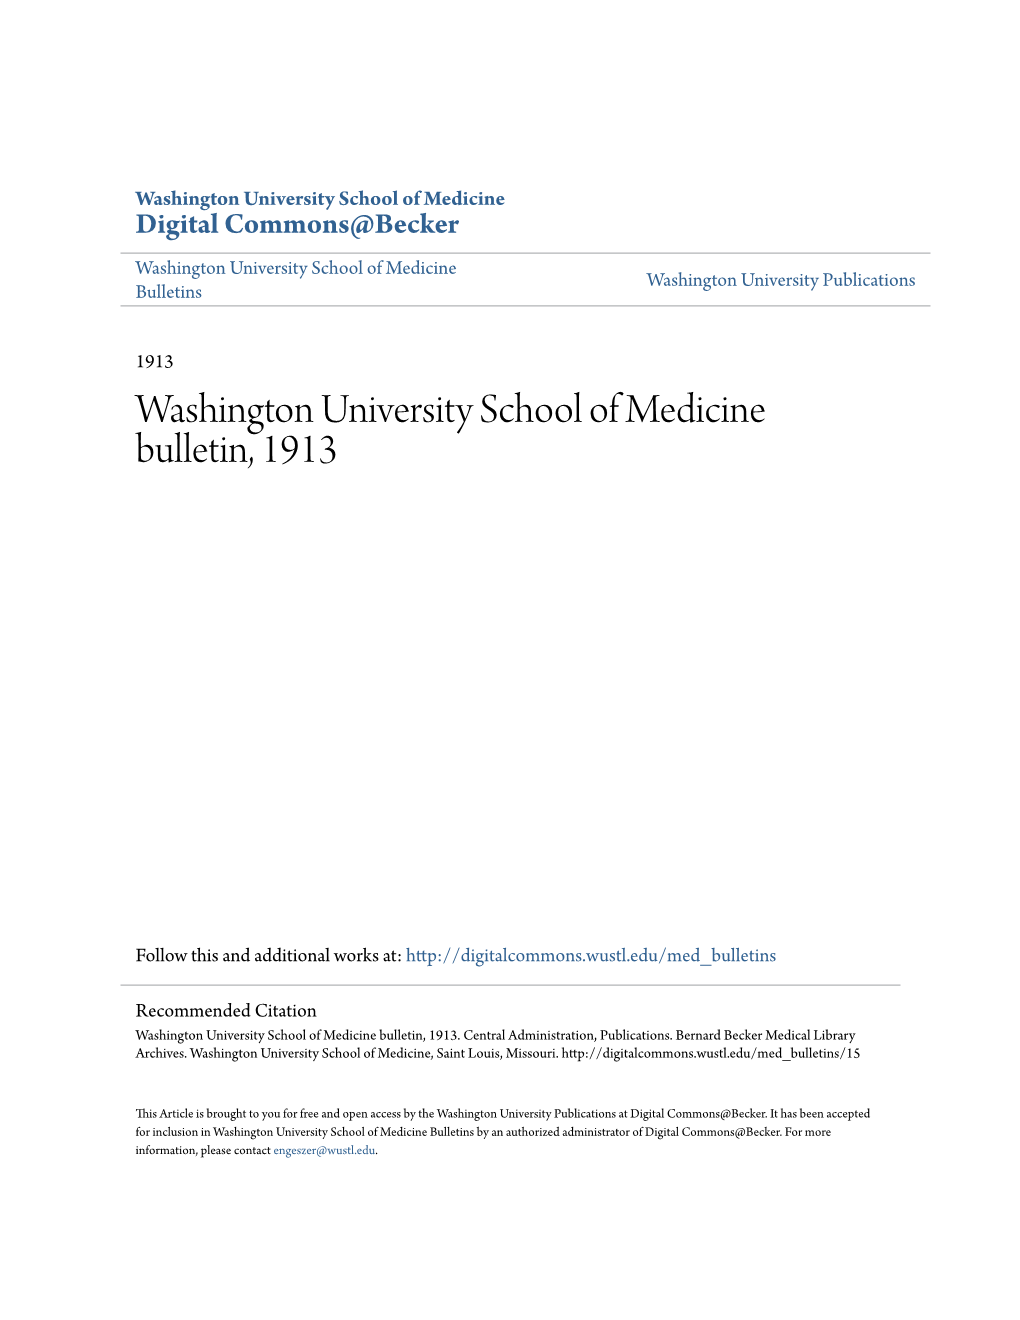 Washington University School of Medicine Bulletin, 1913